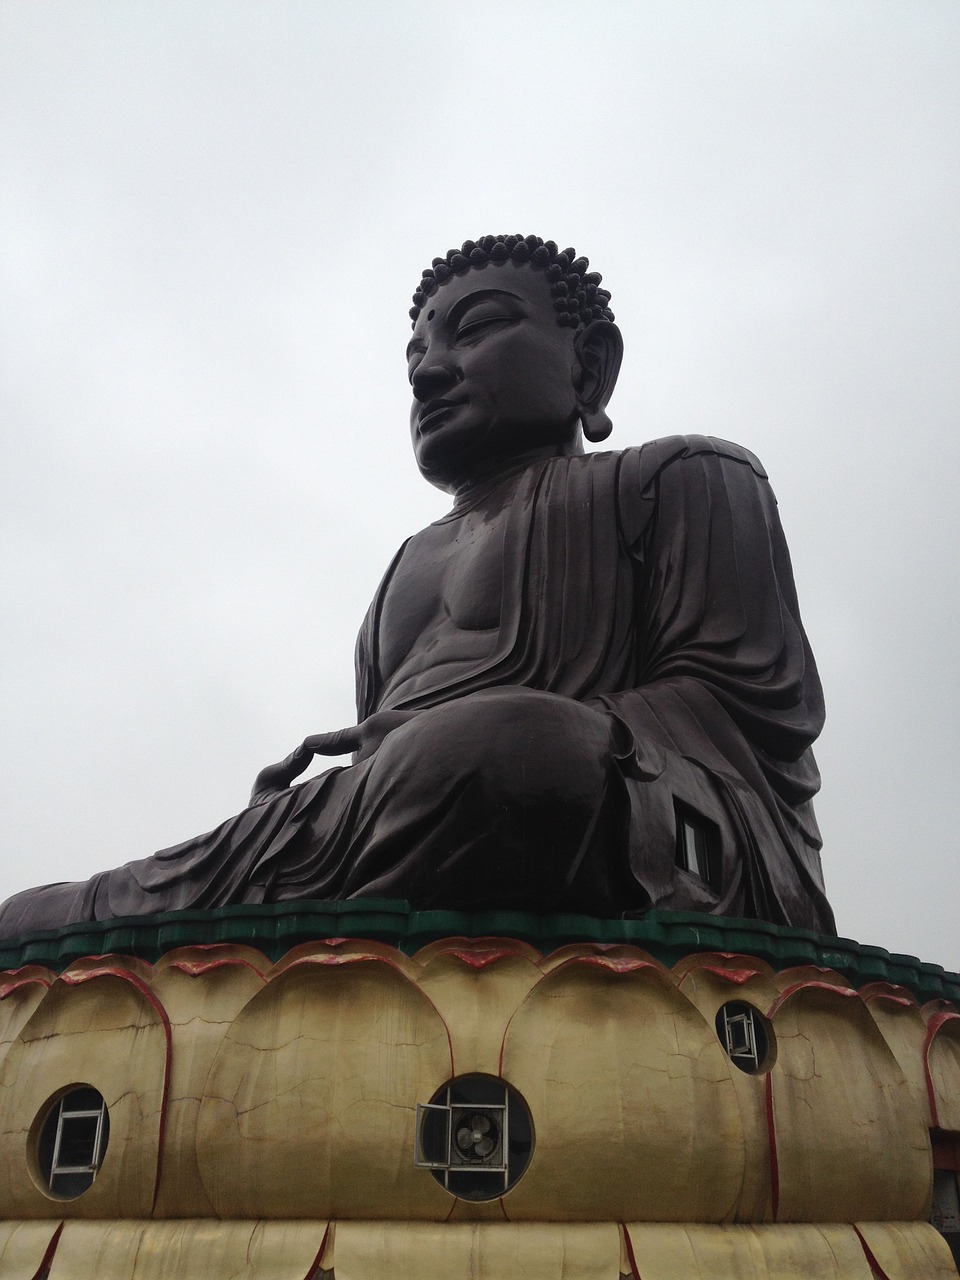 八卦山 big buddha buddha the buddha free photo